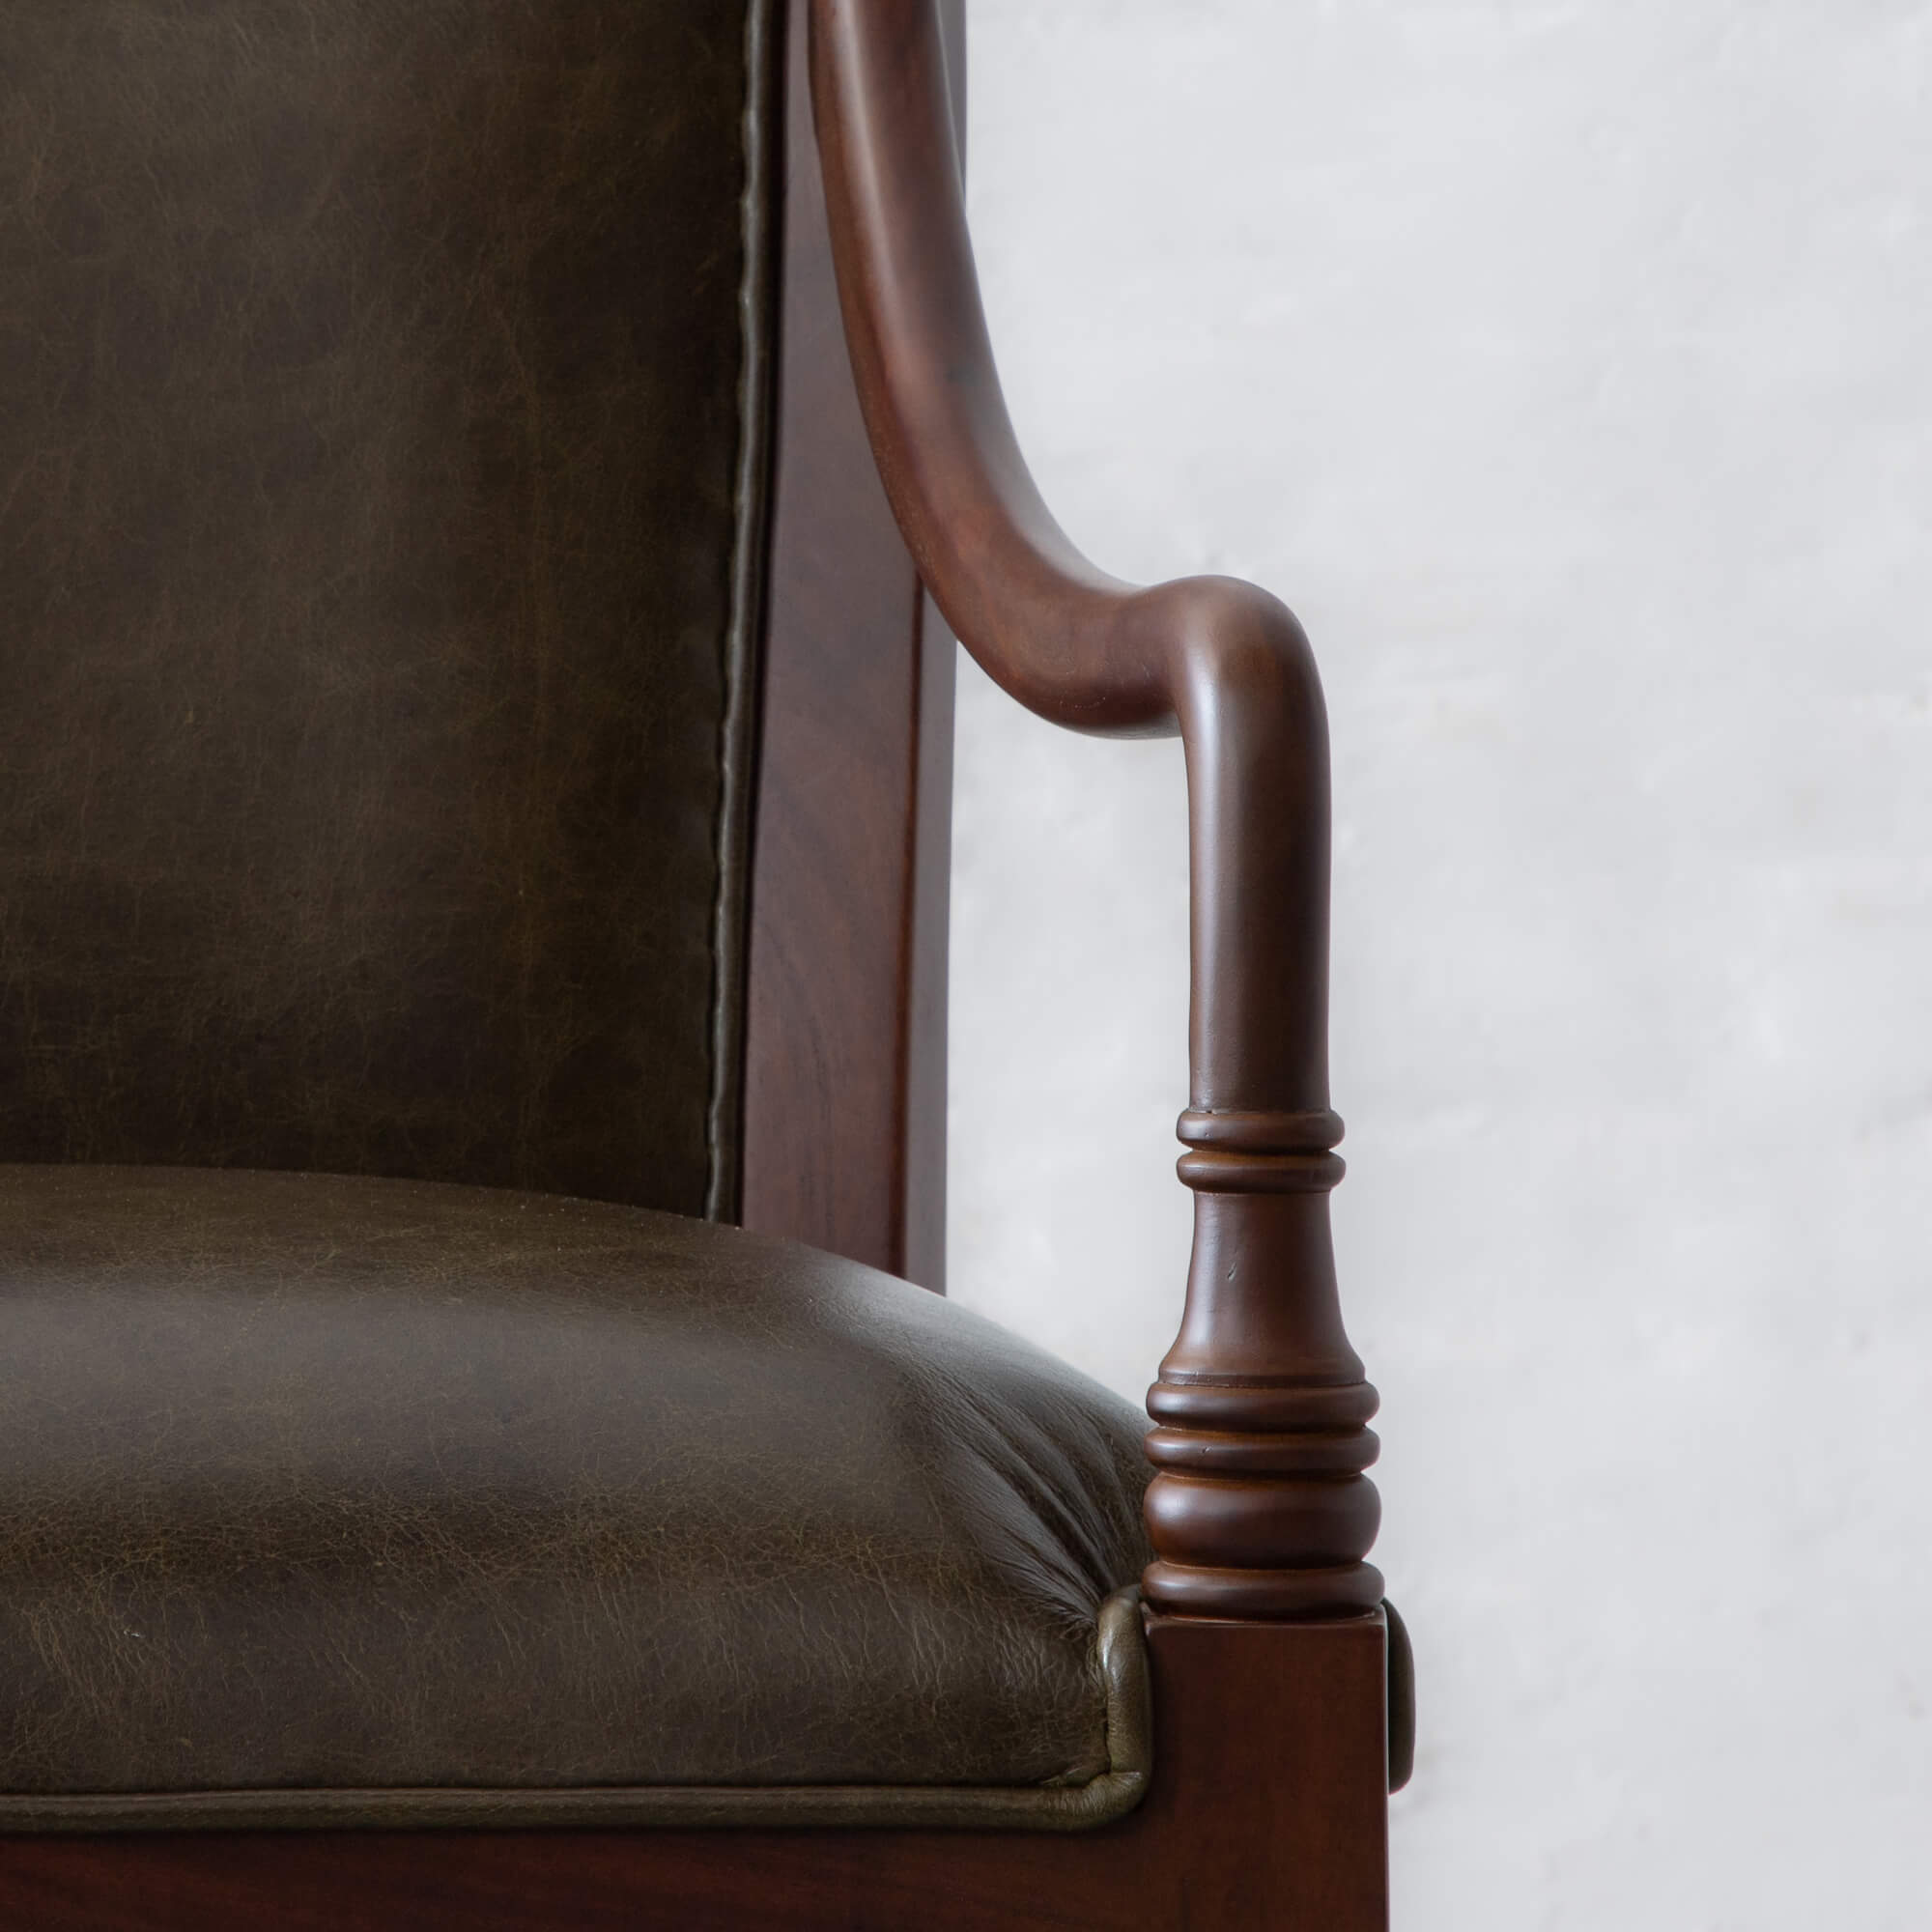 Kochi Upholstered Back Leather Armchair